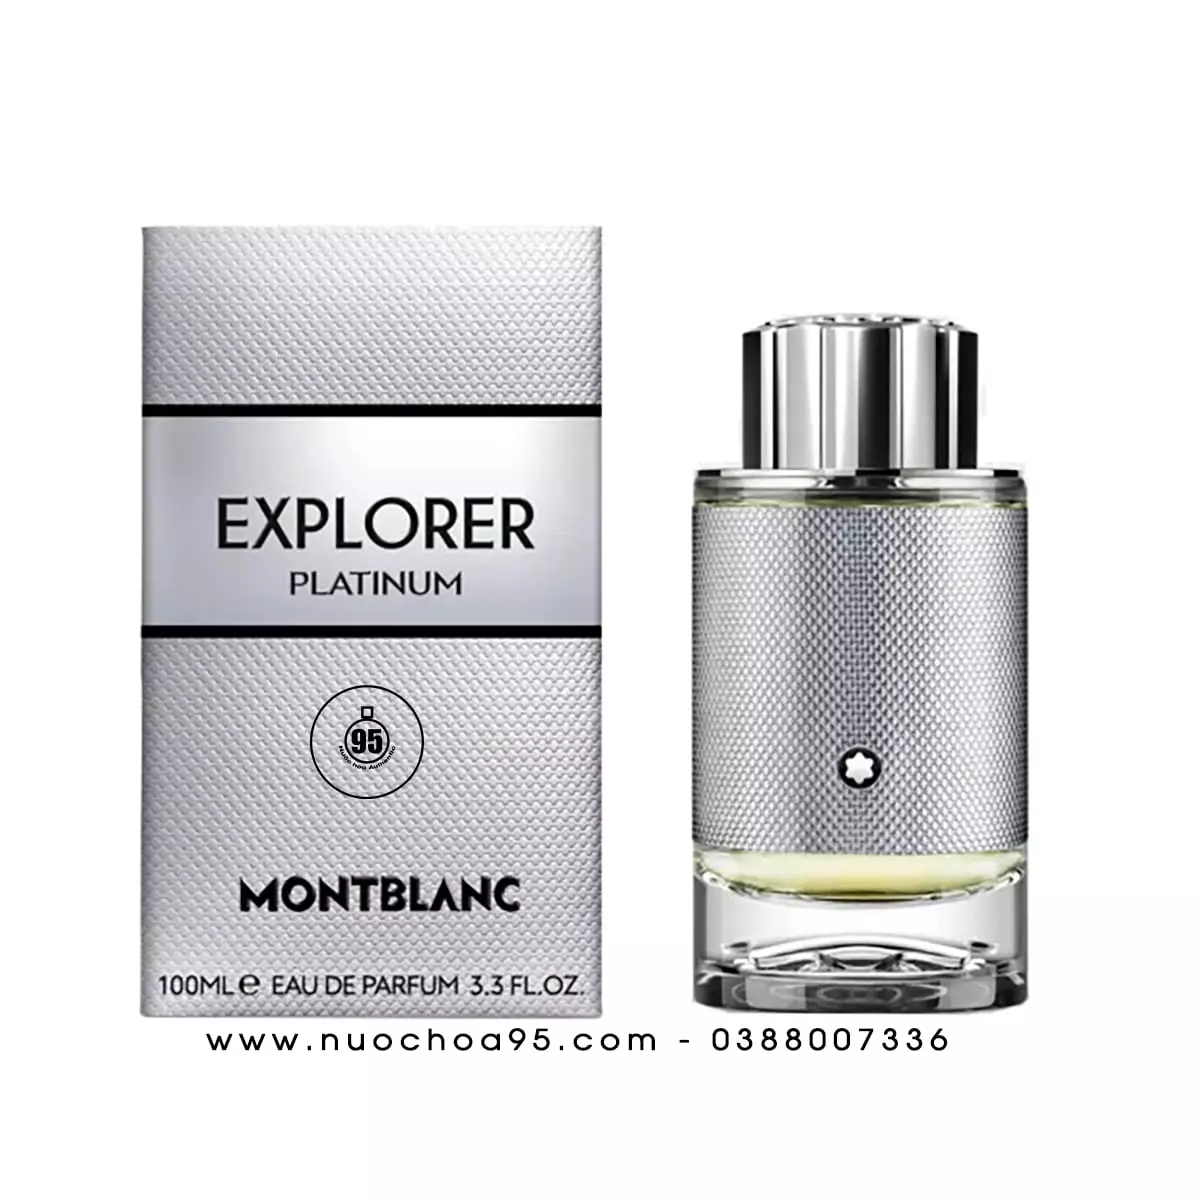 Nước hoa Montblanc Explorer Platinum